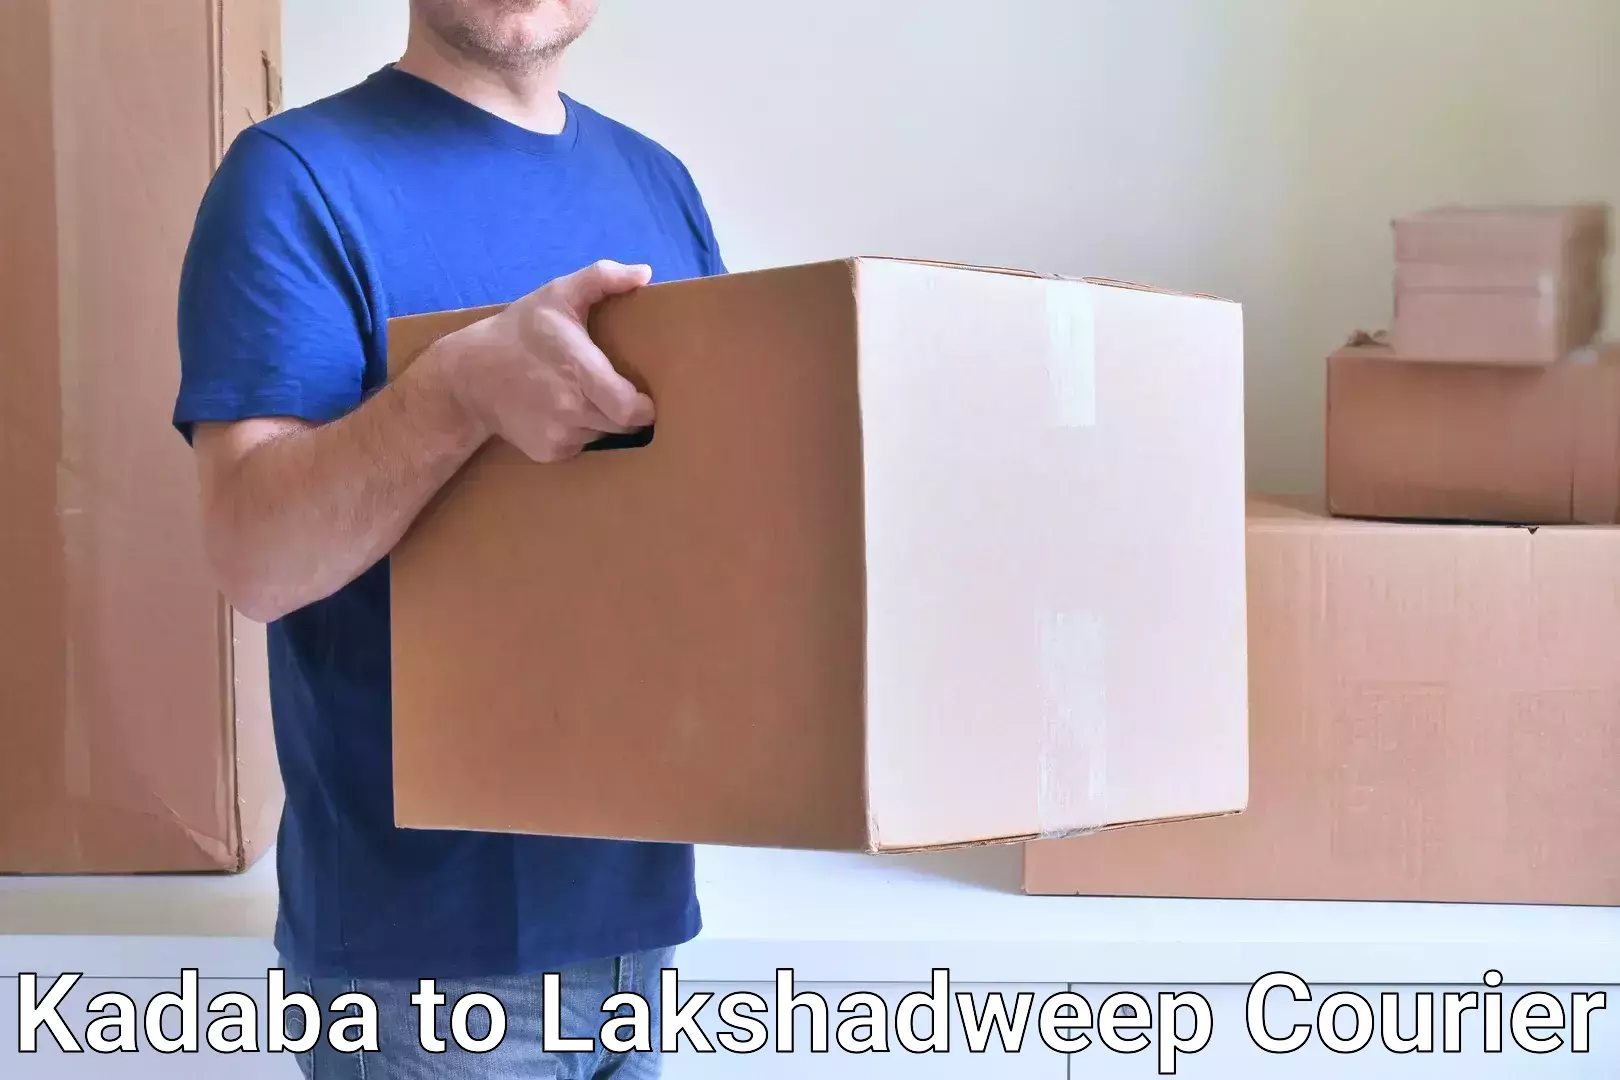 Automated parcel services Kadaba to Lakshadweep